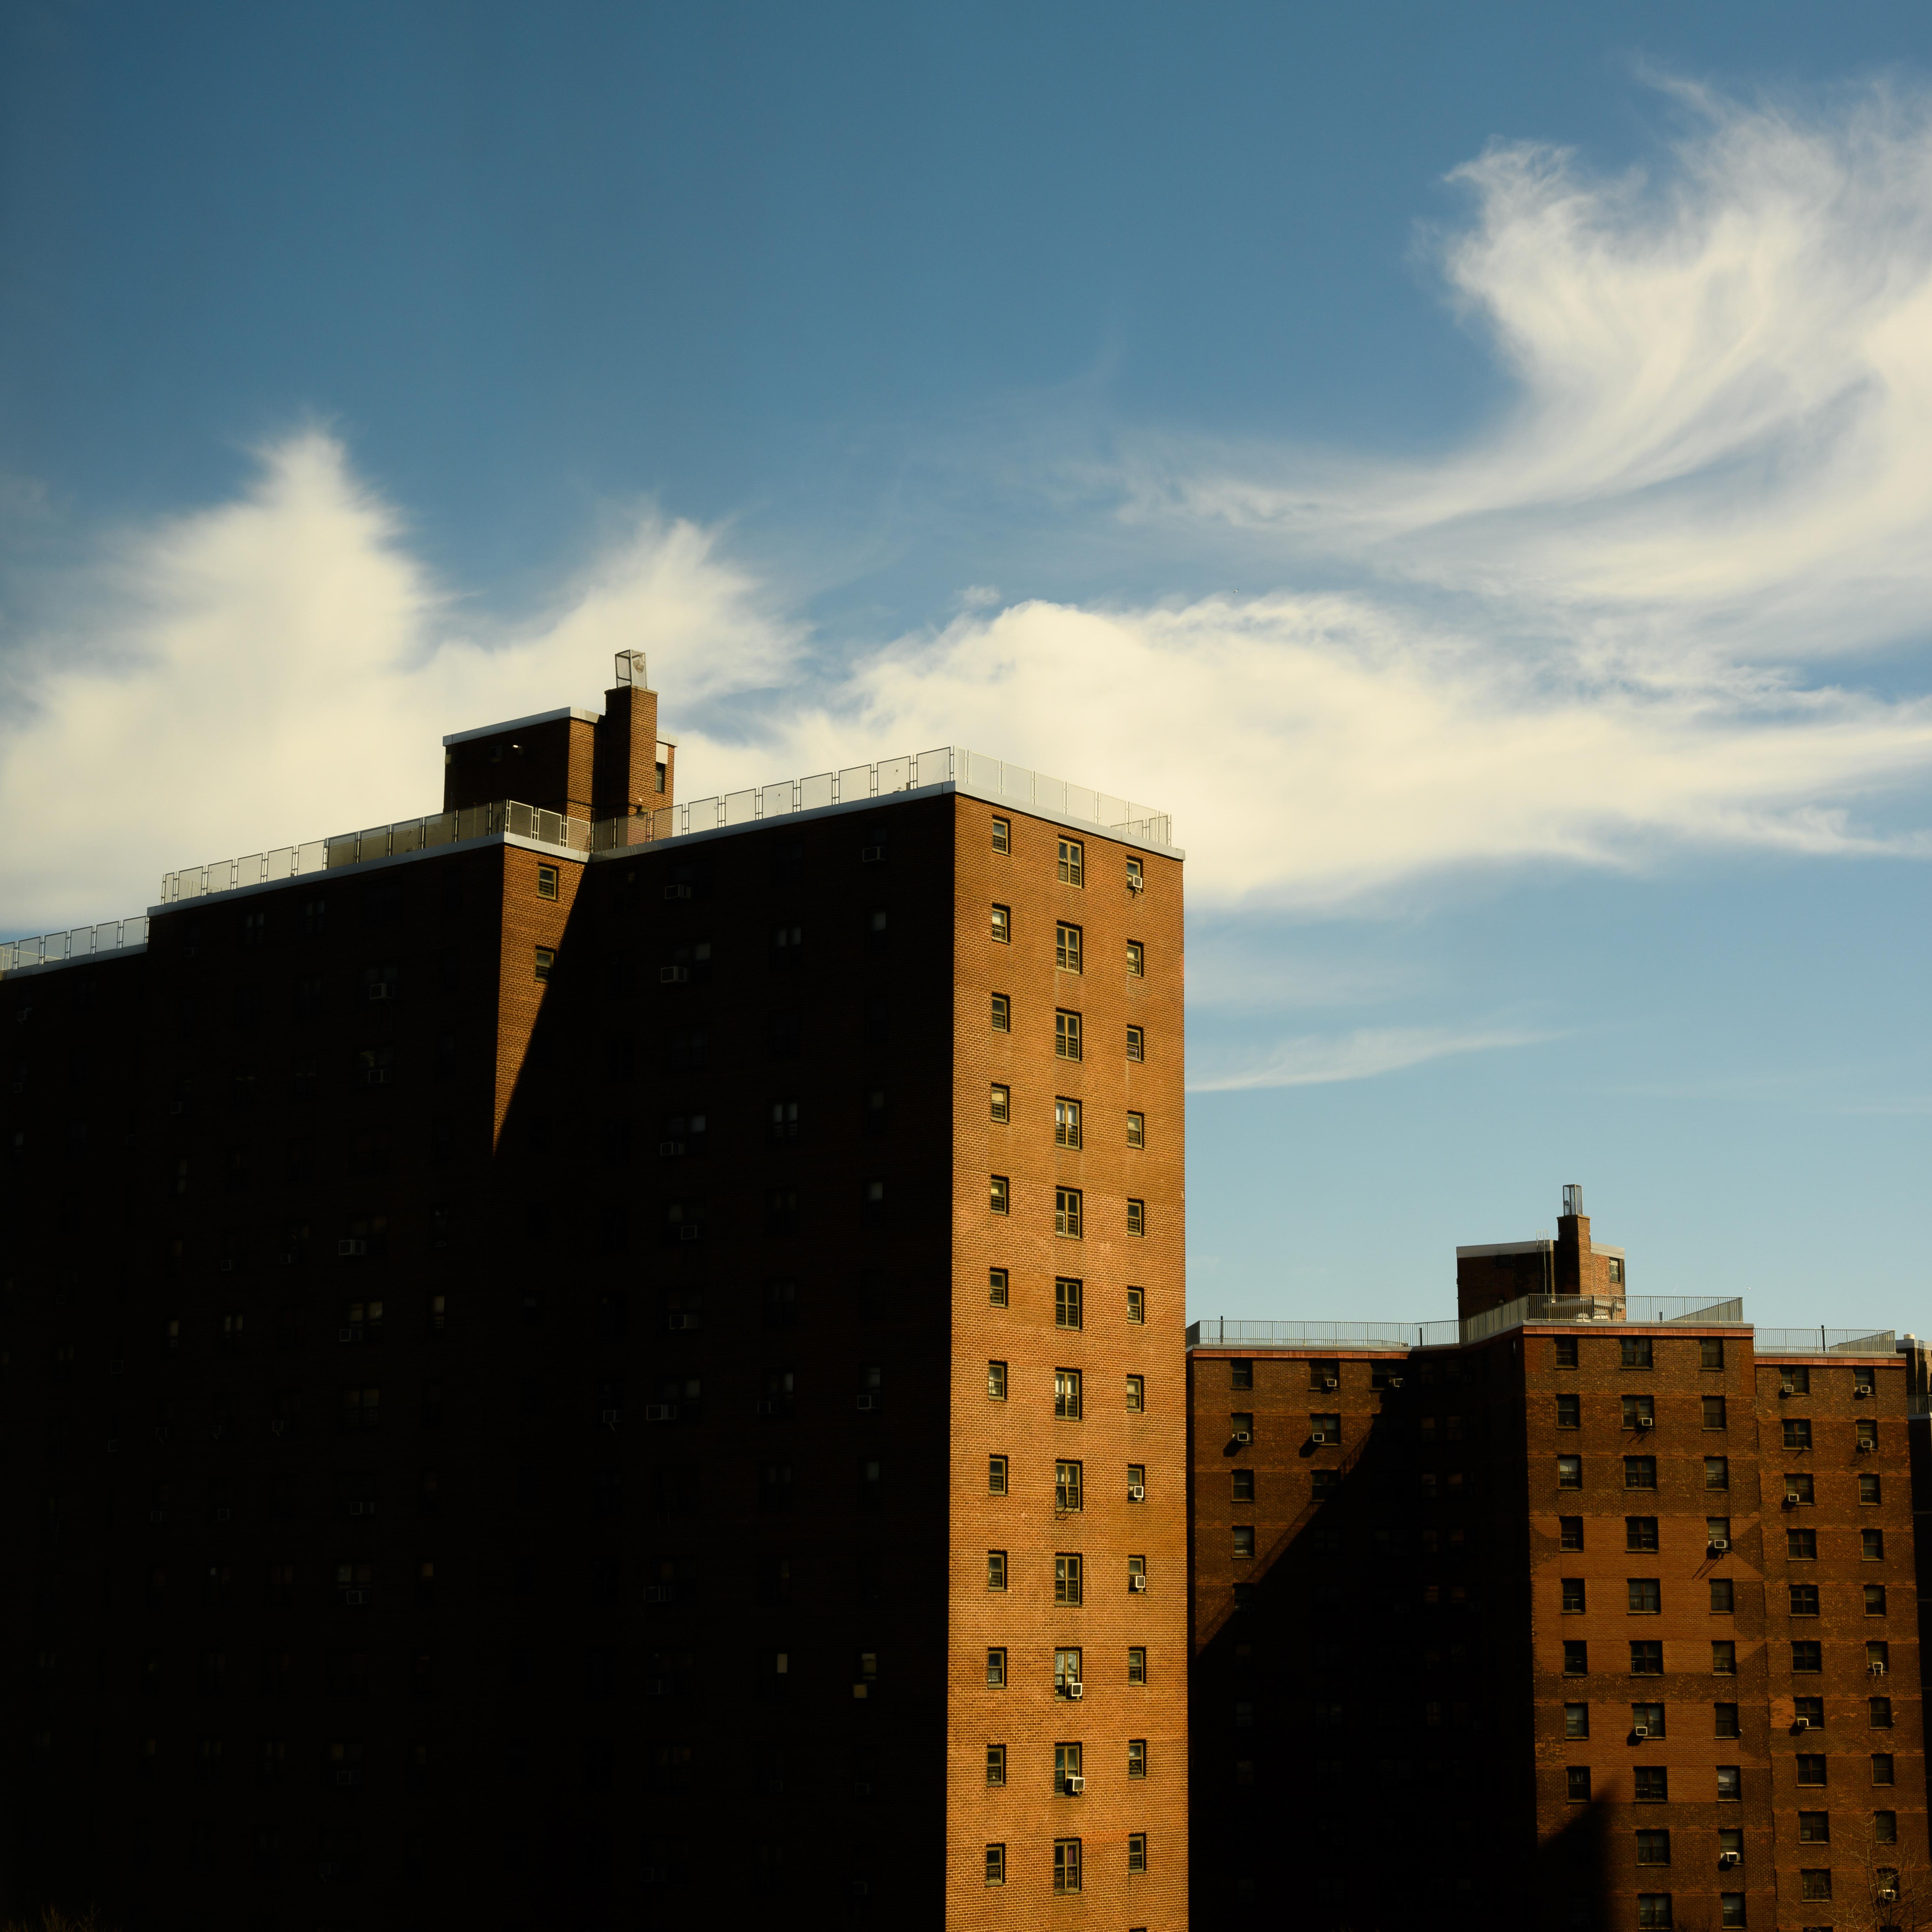 Brian Finke Landscape Photograph - Untitled (Lower East Side, NYC)